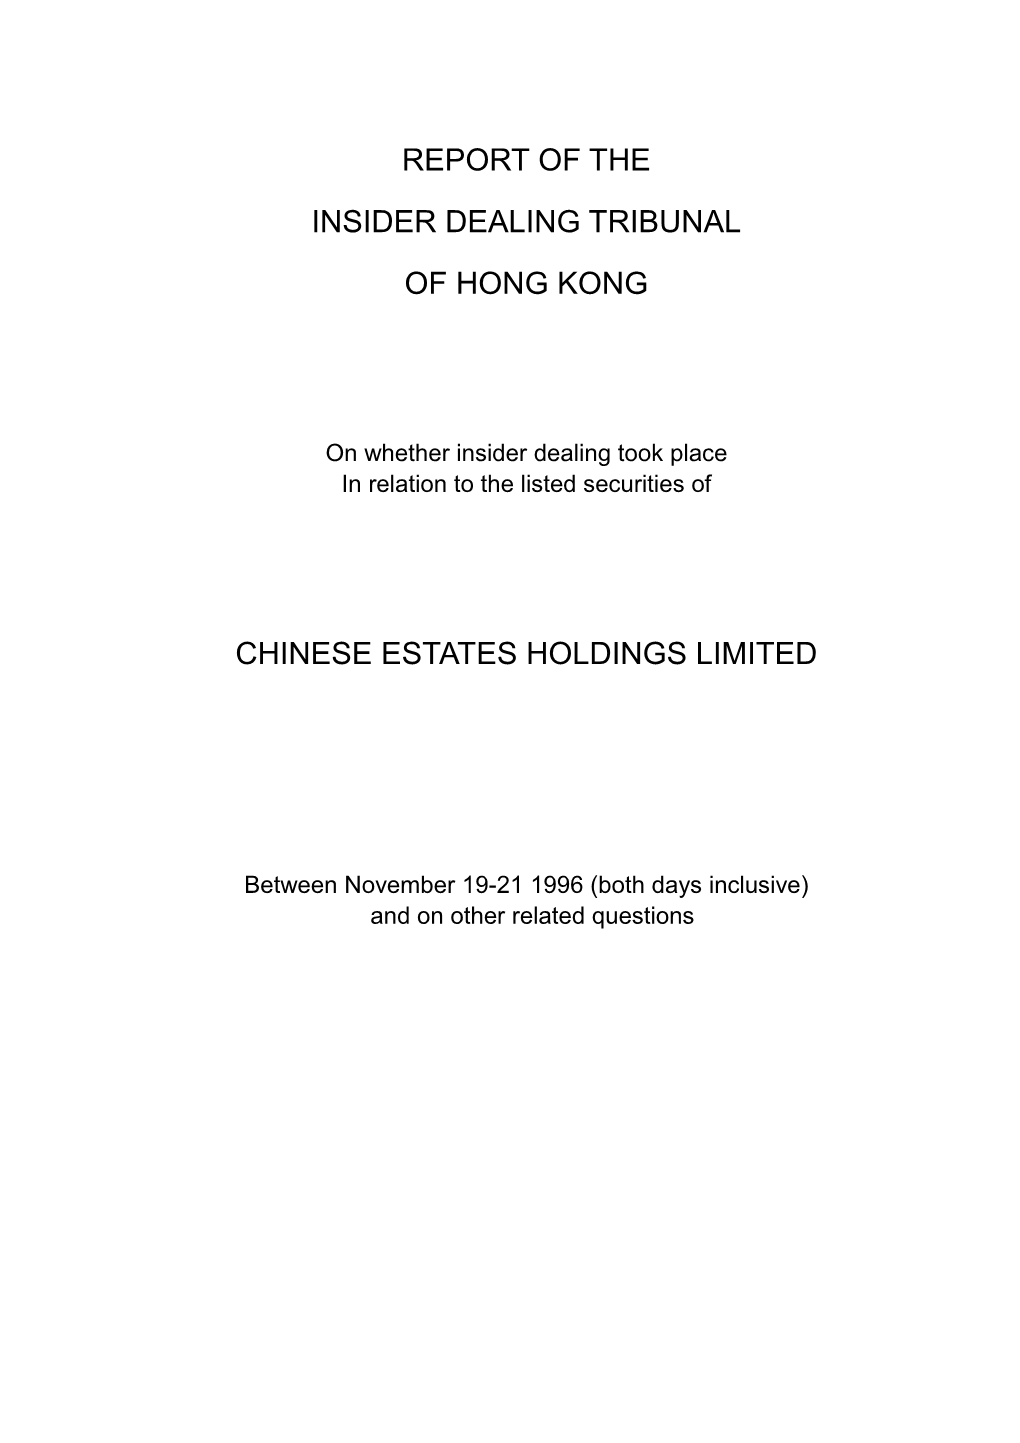 Report of the Insider Dealing Tribunal of Hong Kong